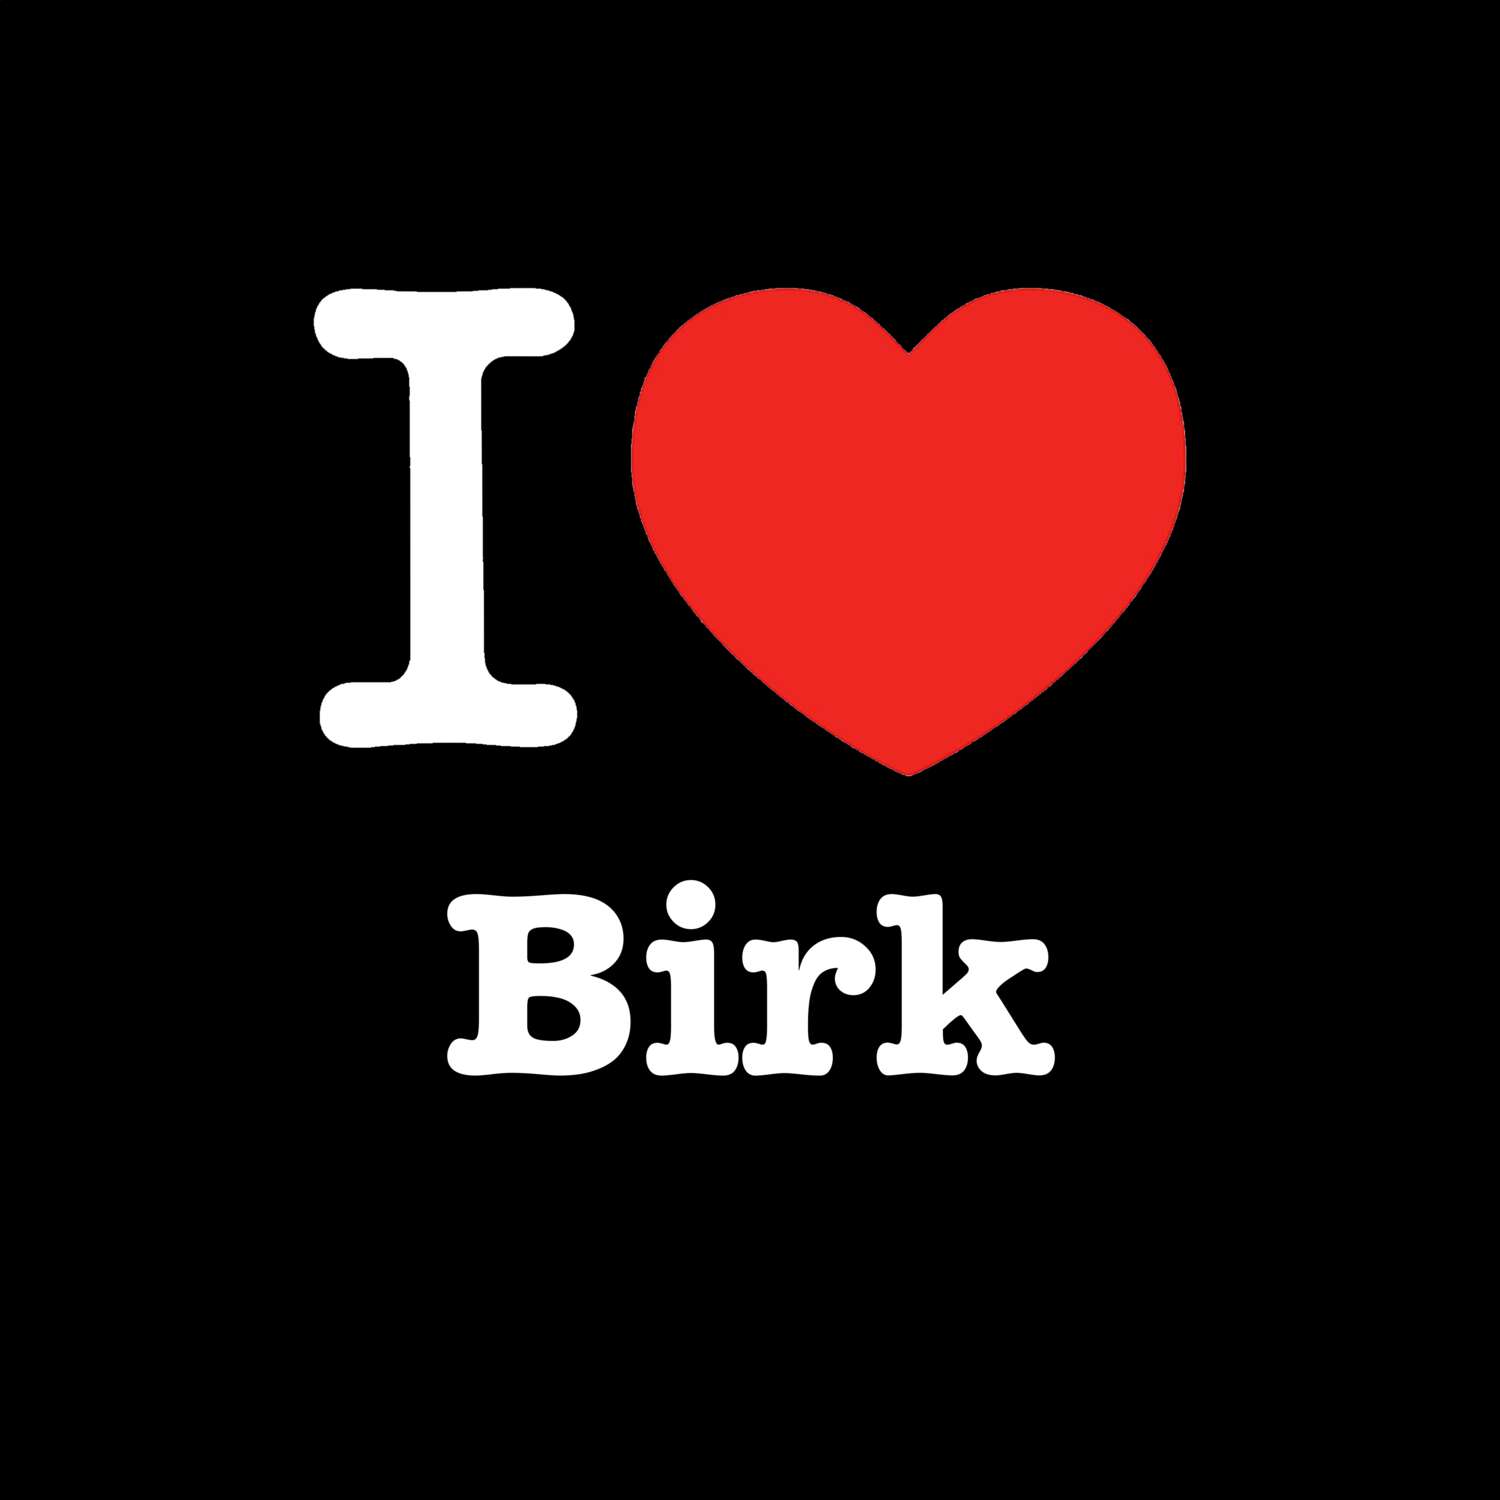 Birk T-Shirt »I love«